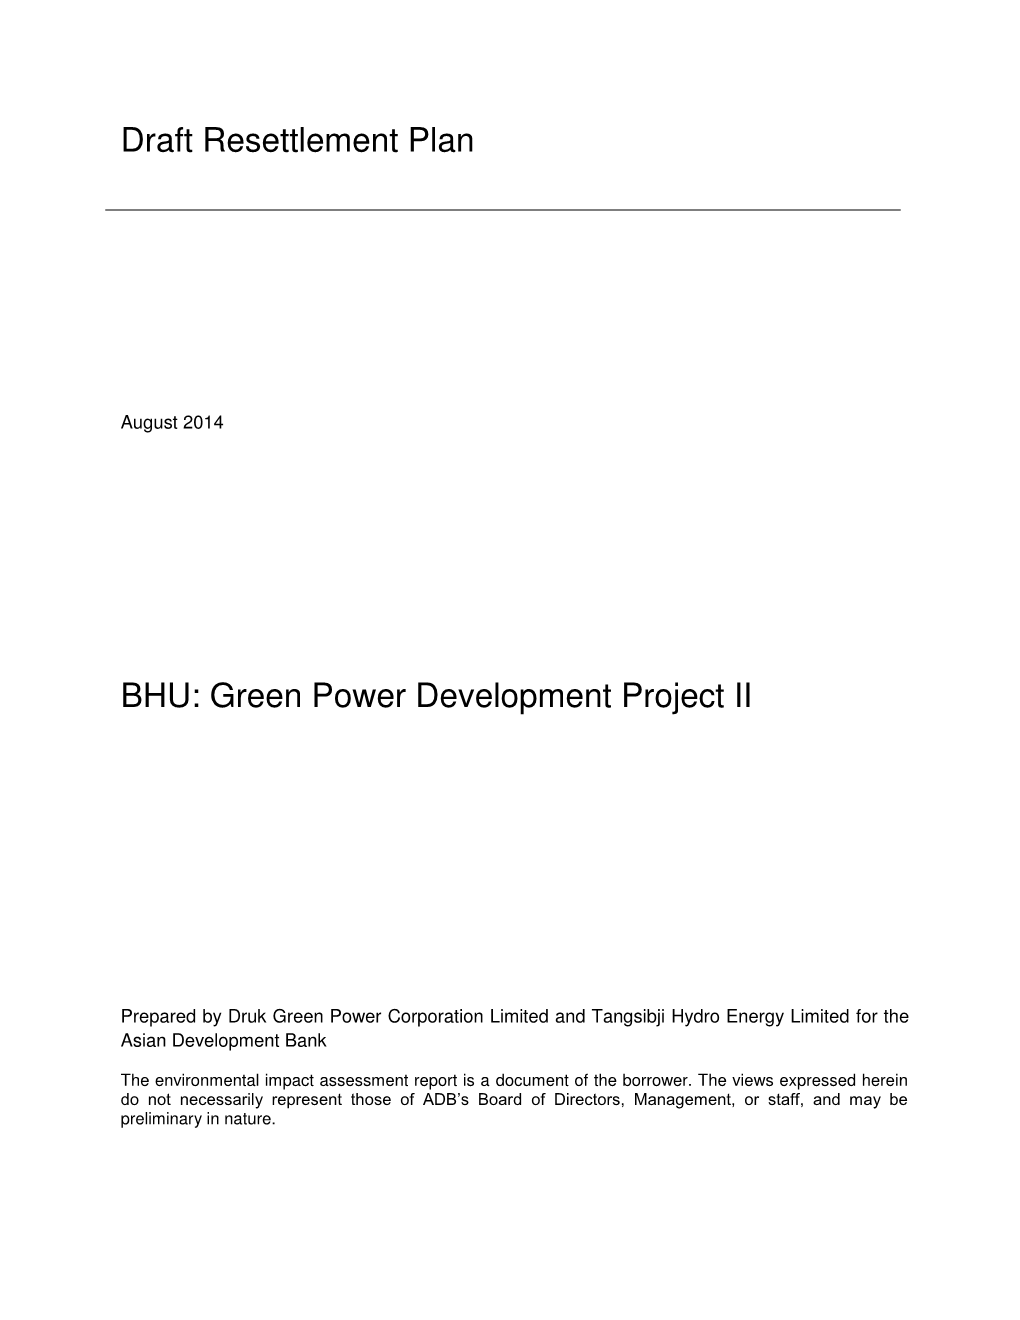 Nikachhu Hydropower Project Draft Resettlement Plan